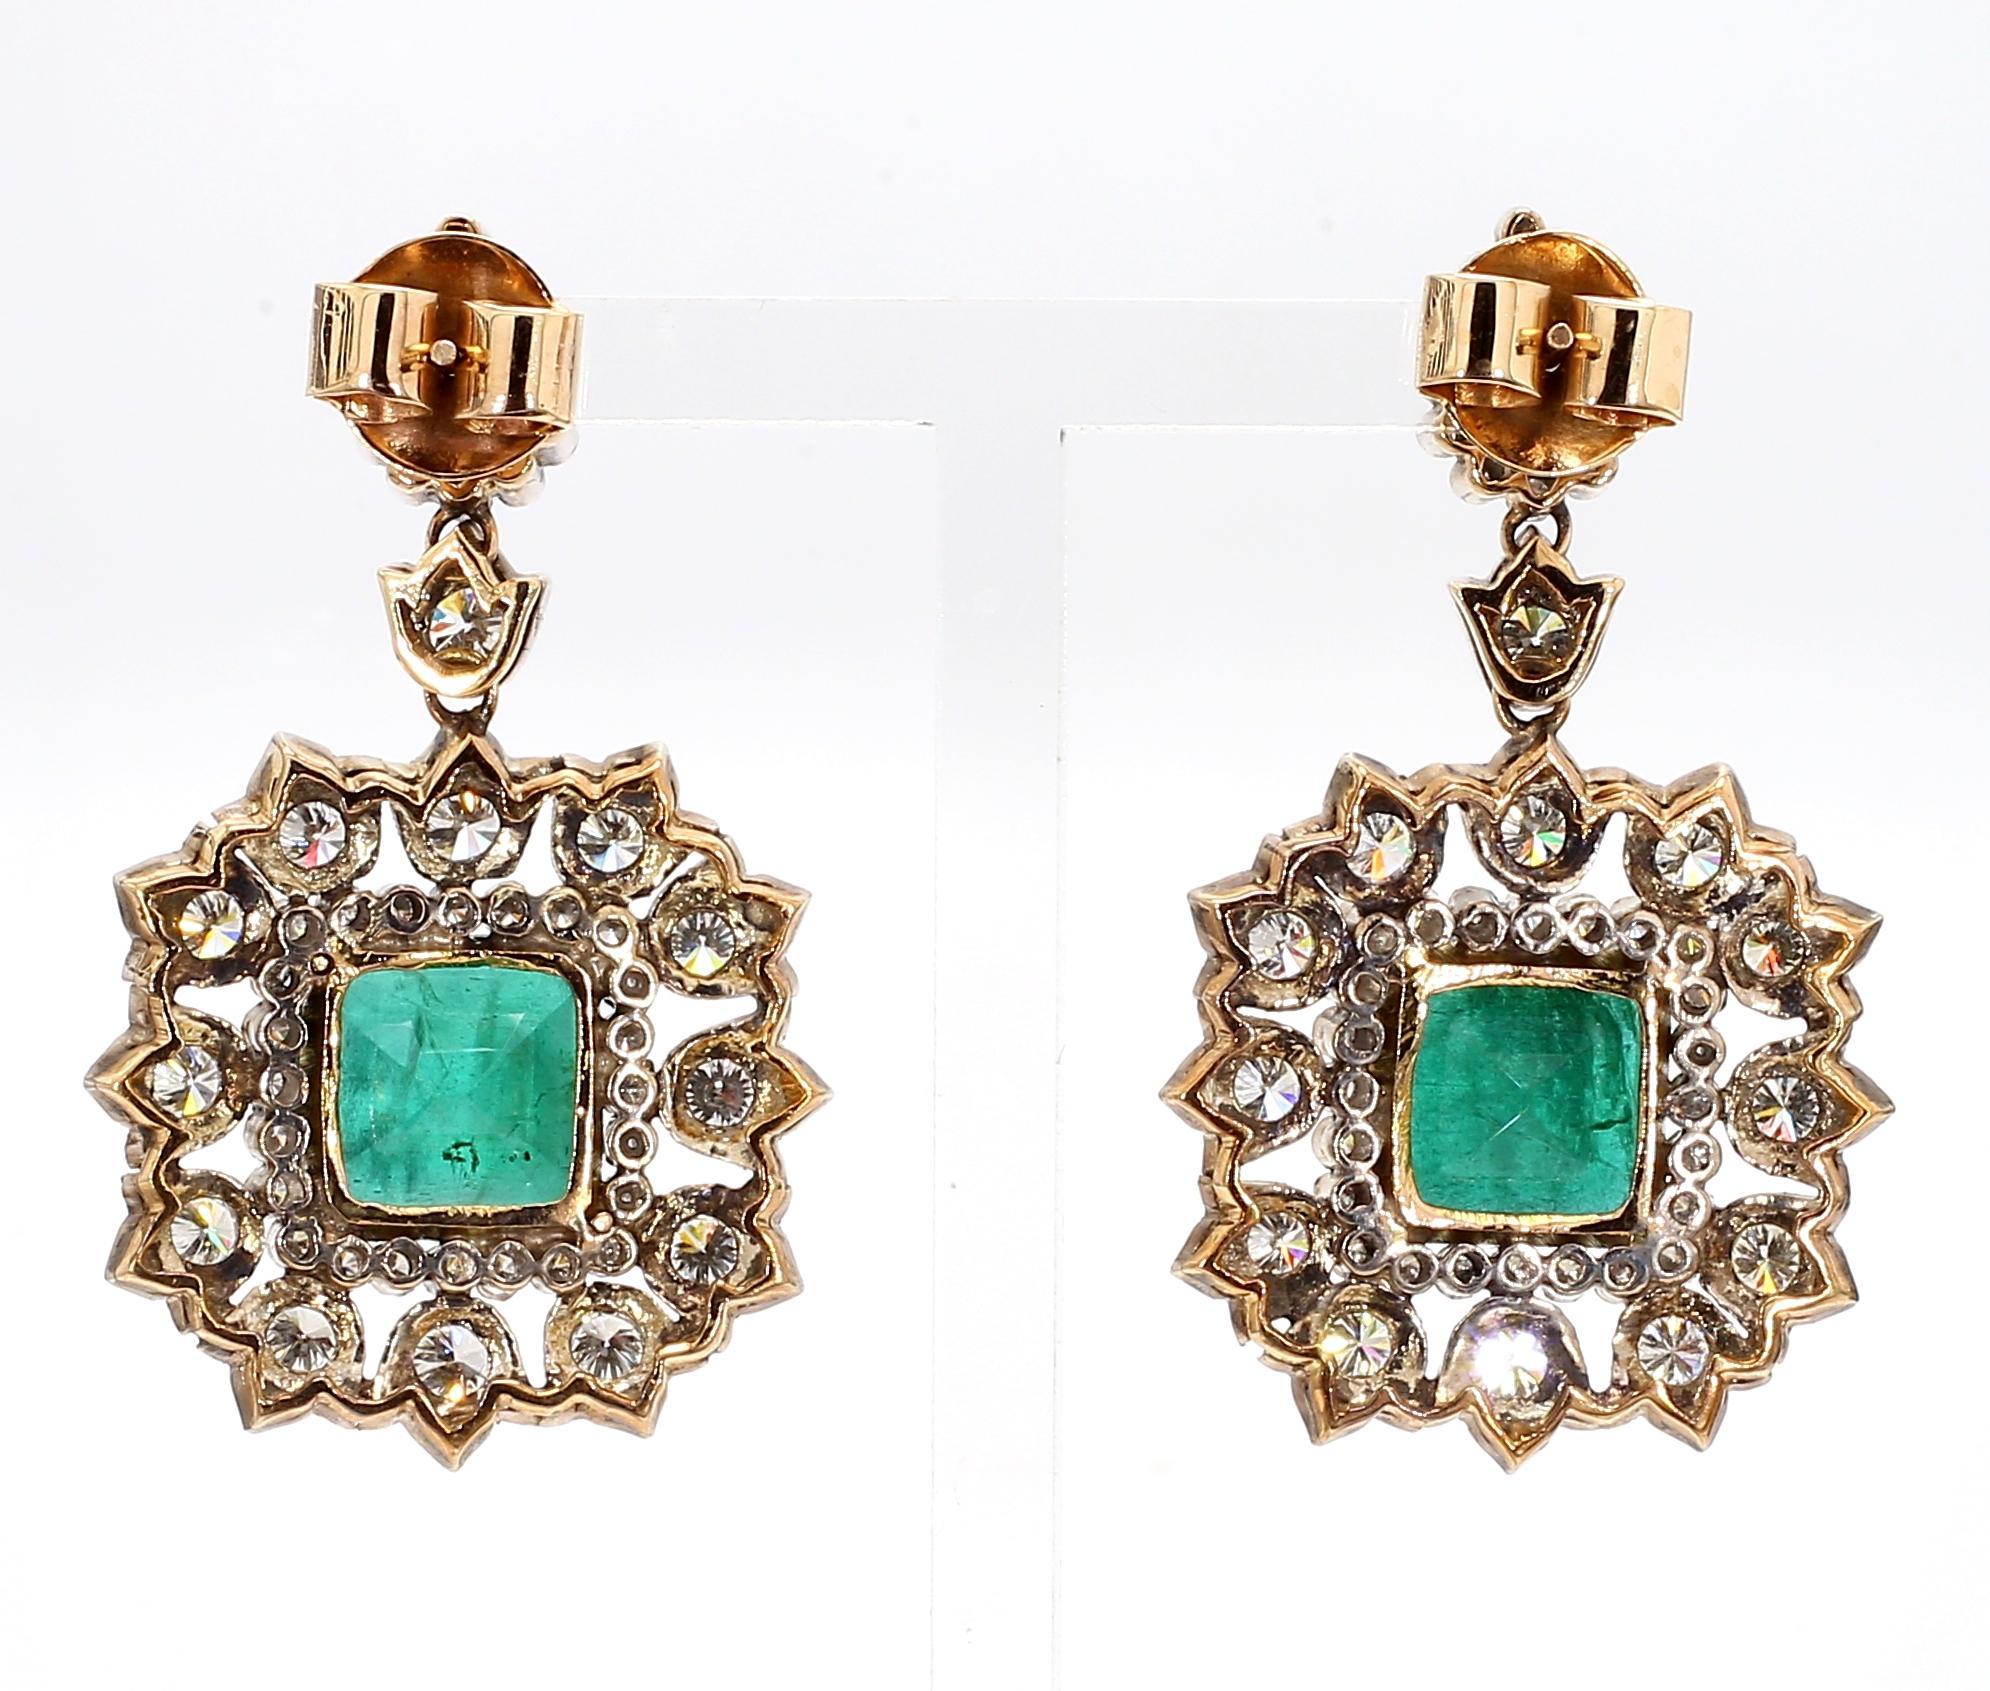 The York - 16.1 Carat Zambian Emerald and 5.4 Carat Diamond Earrings 18K Gold For Sale 1